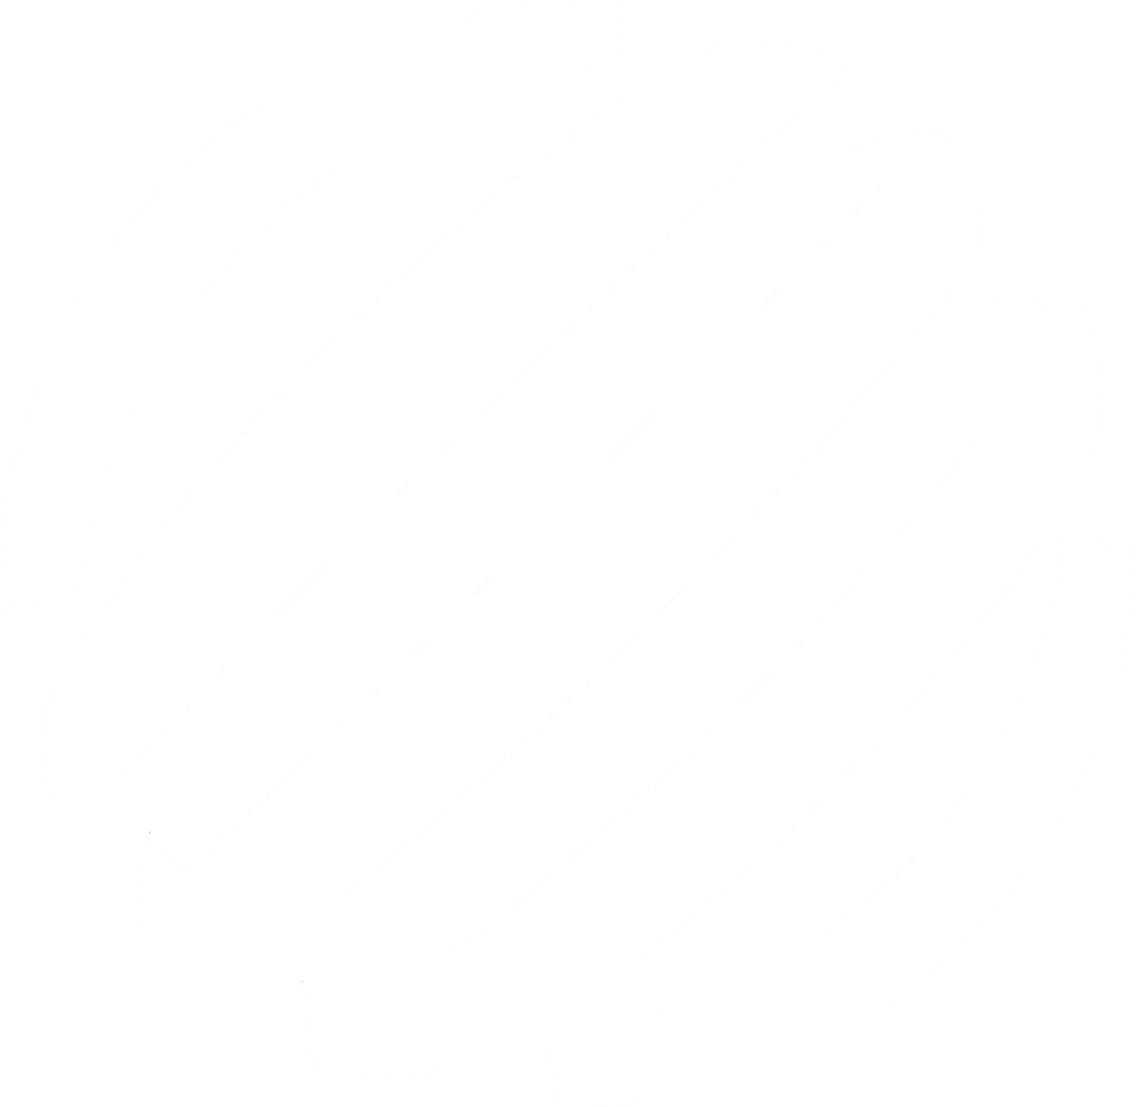 Bael Ingenieria logo